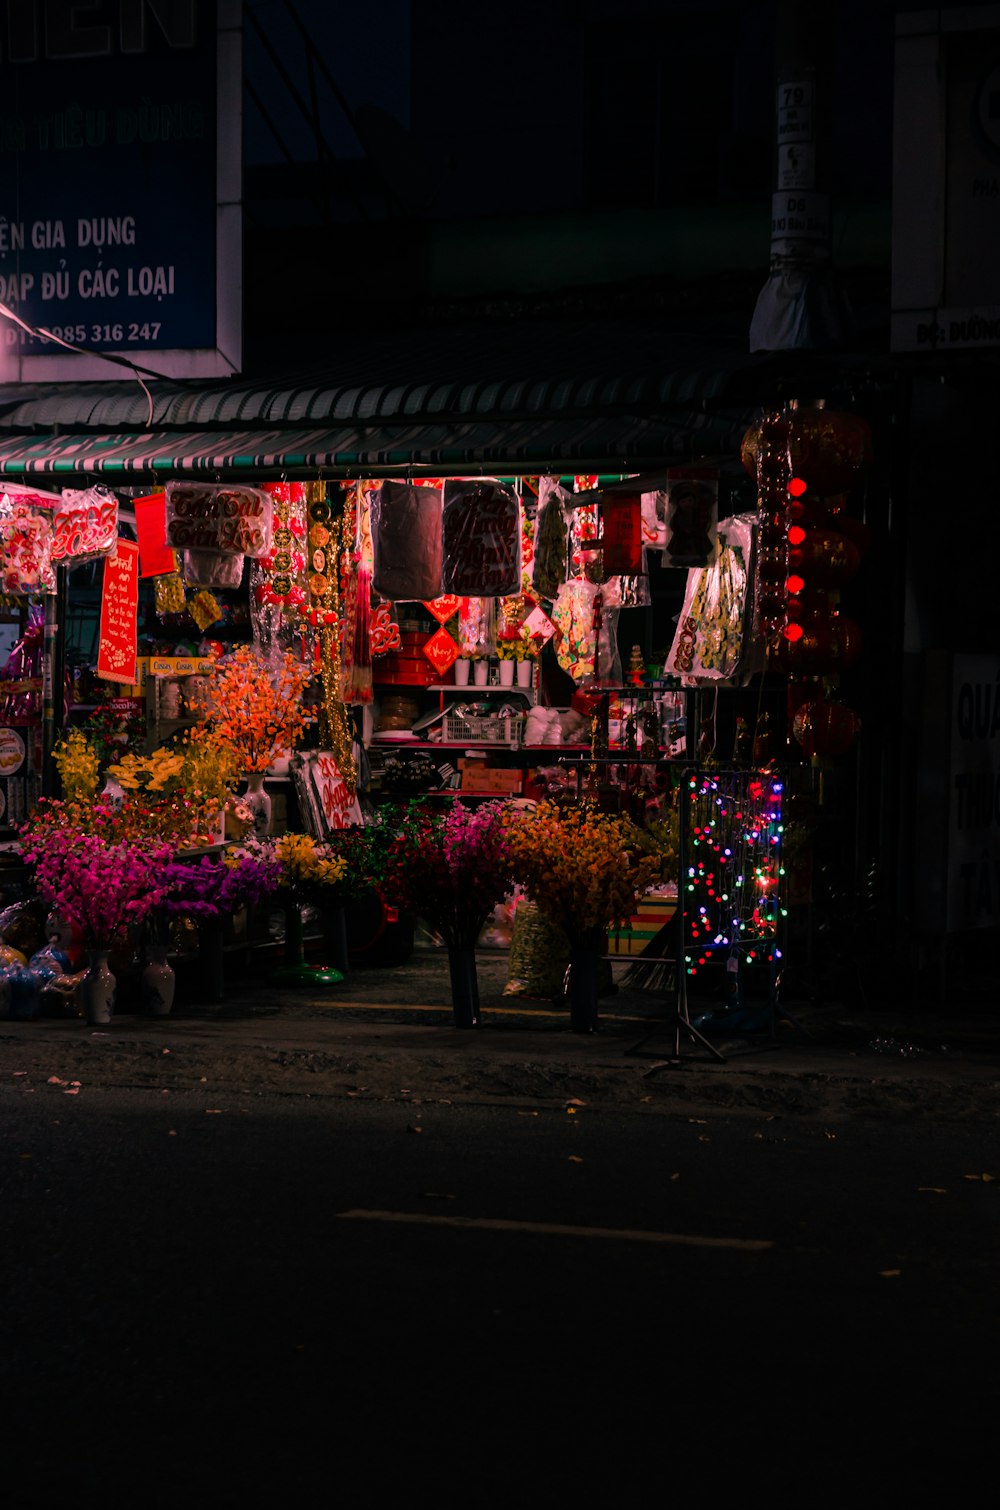 Una calle oscura con un ramo de flores en exhibición